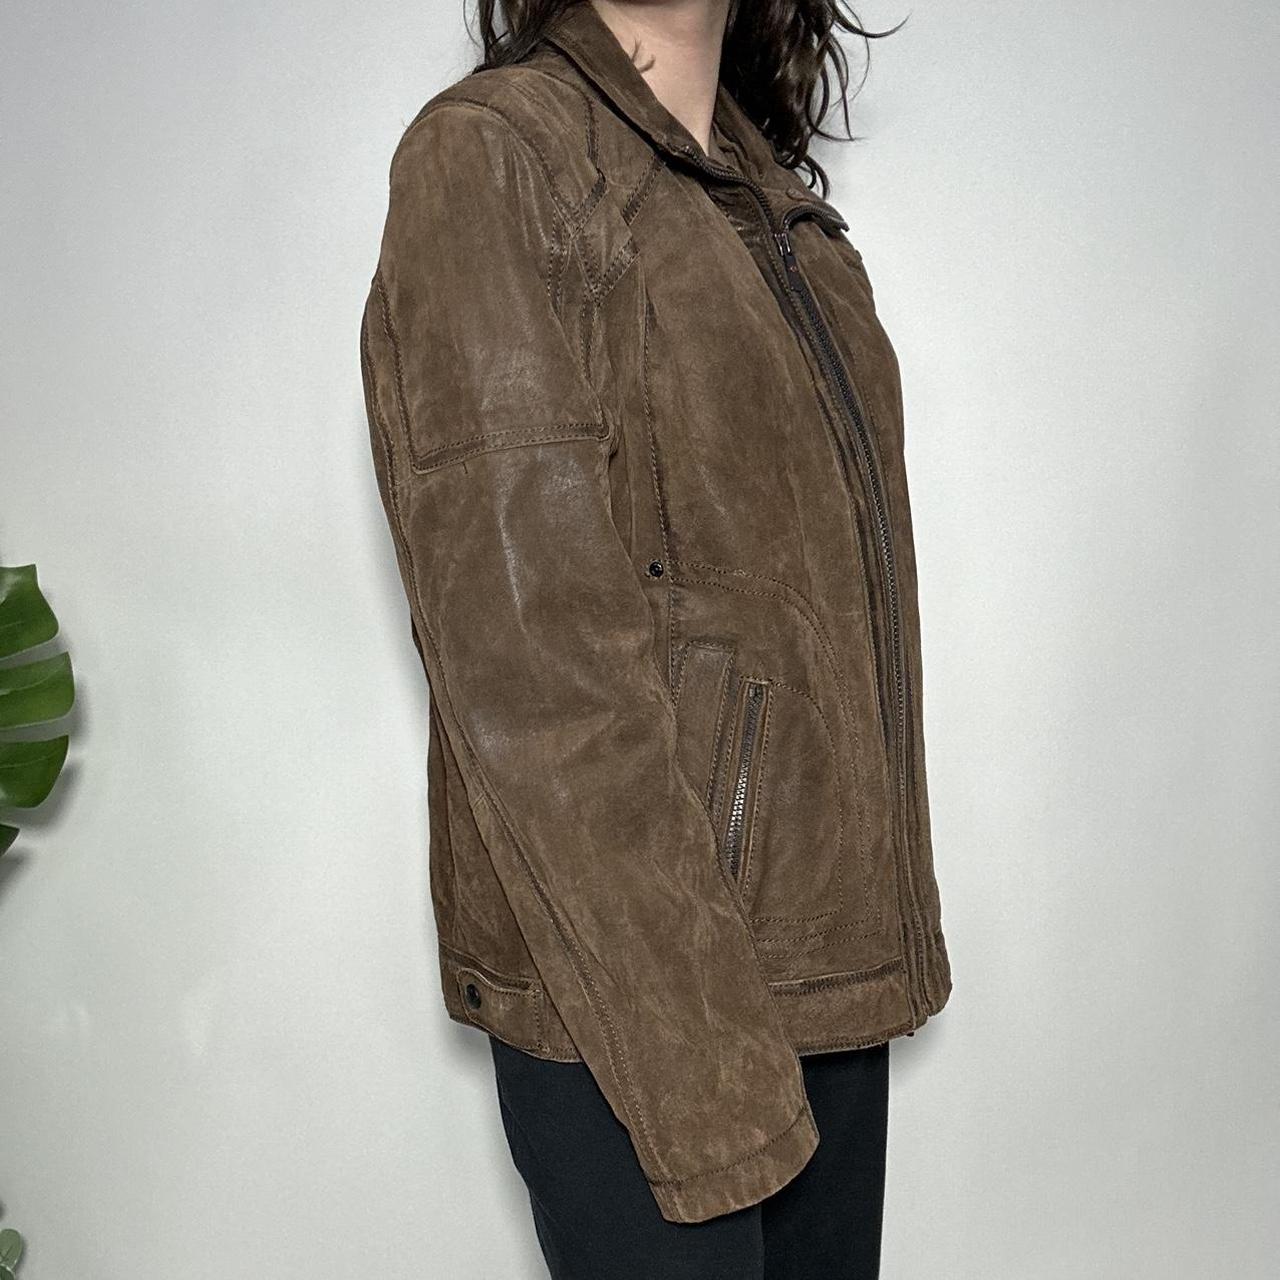 Vintage 90s chocolate brown leather motorcycle jacket